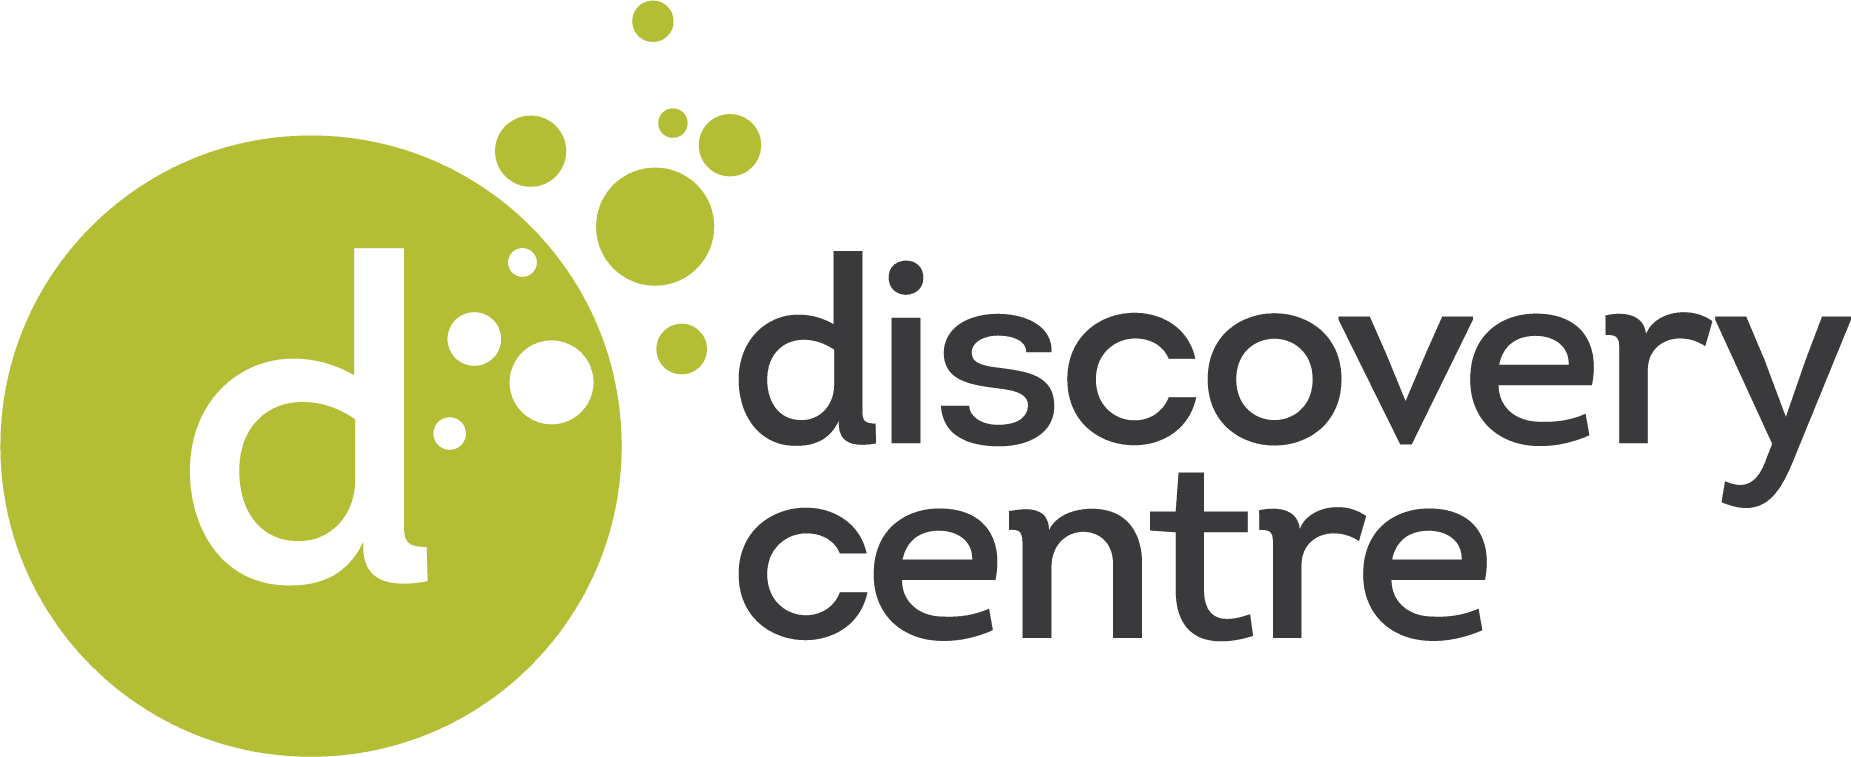 The Discovery Centre logo